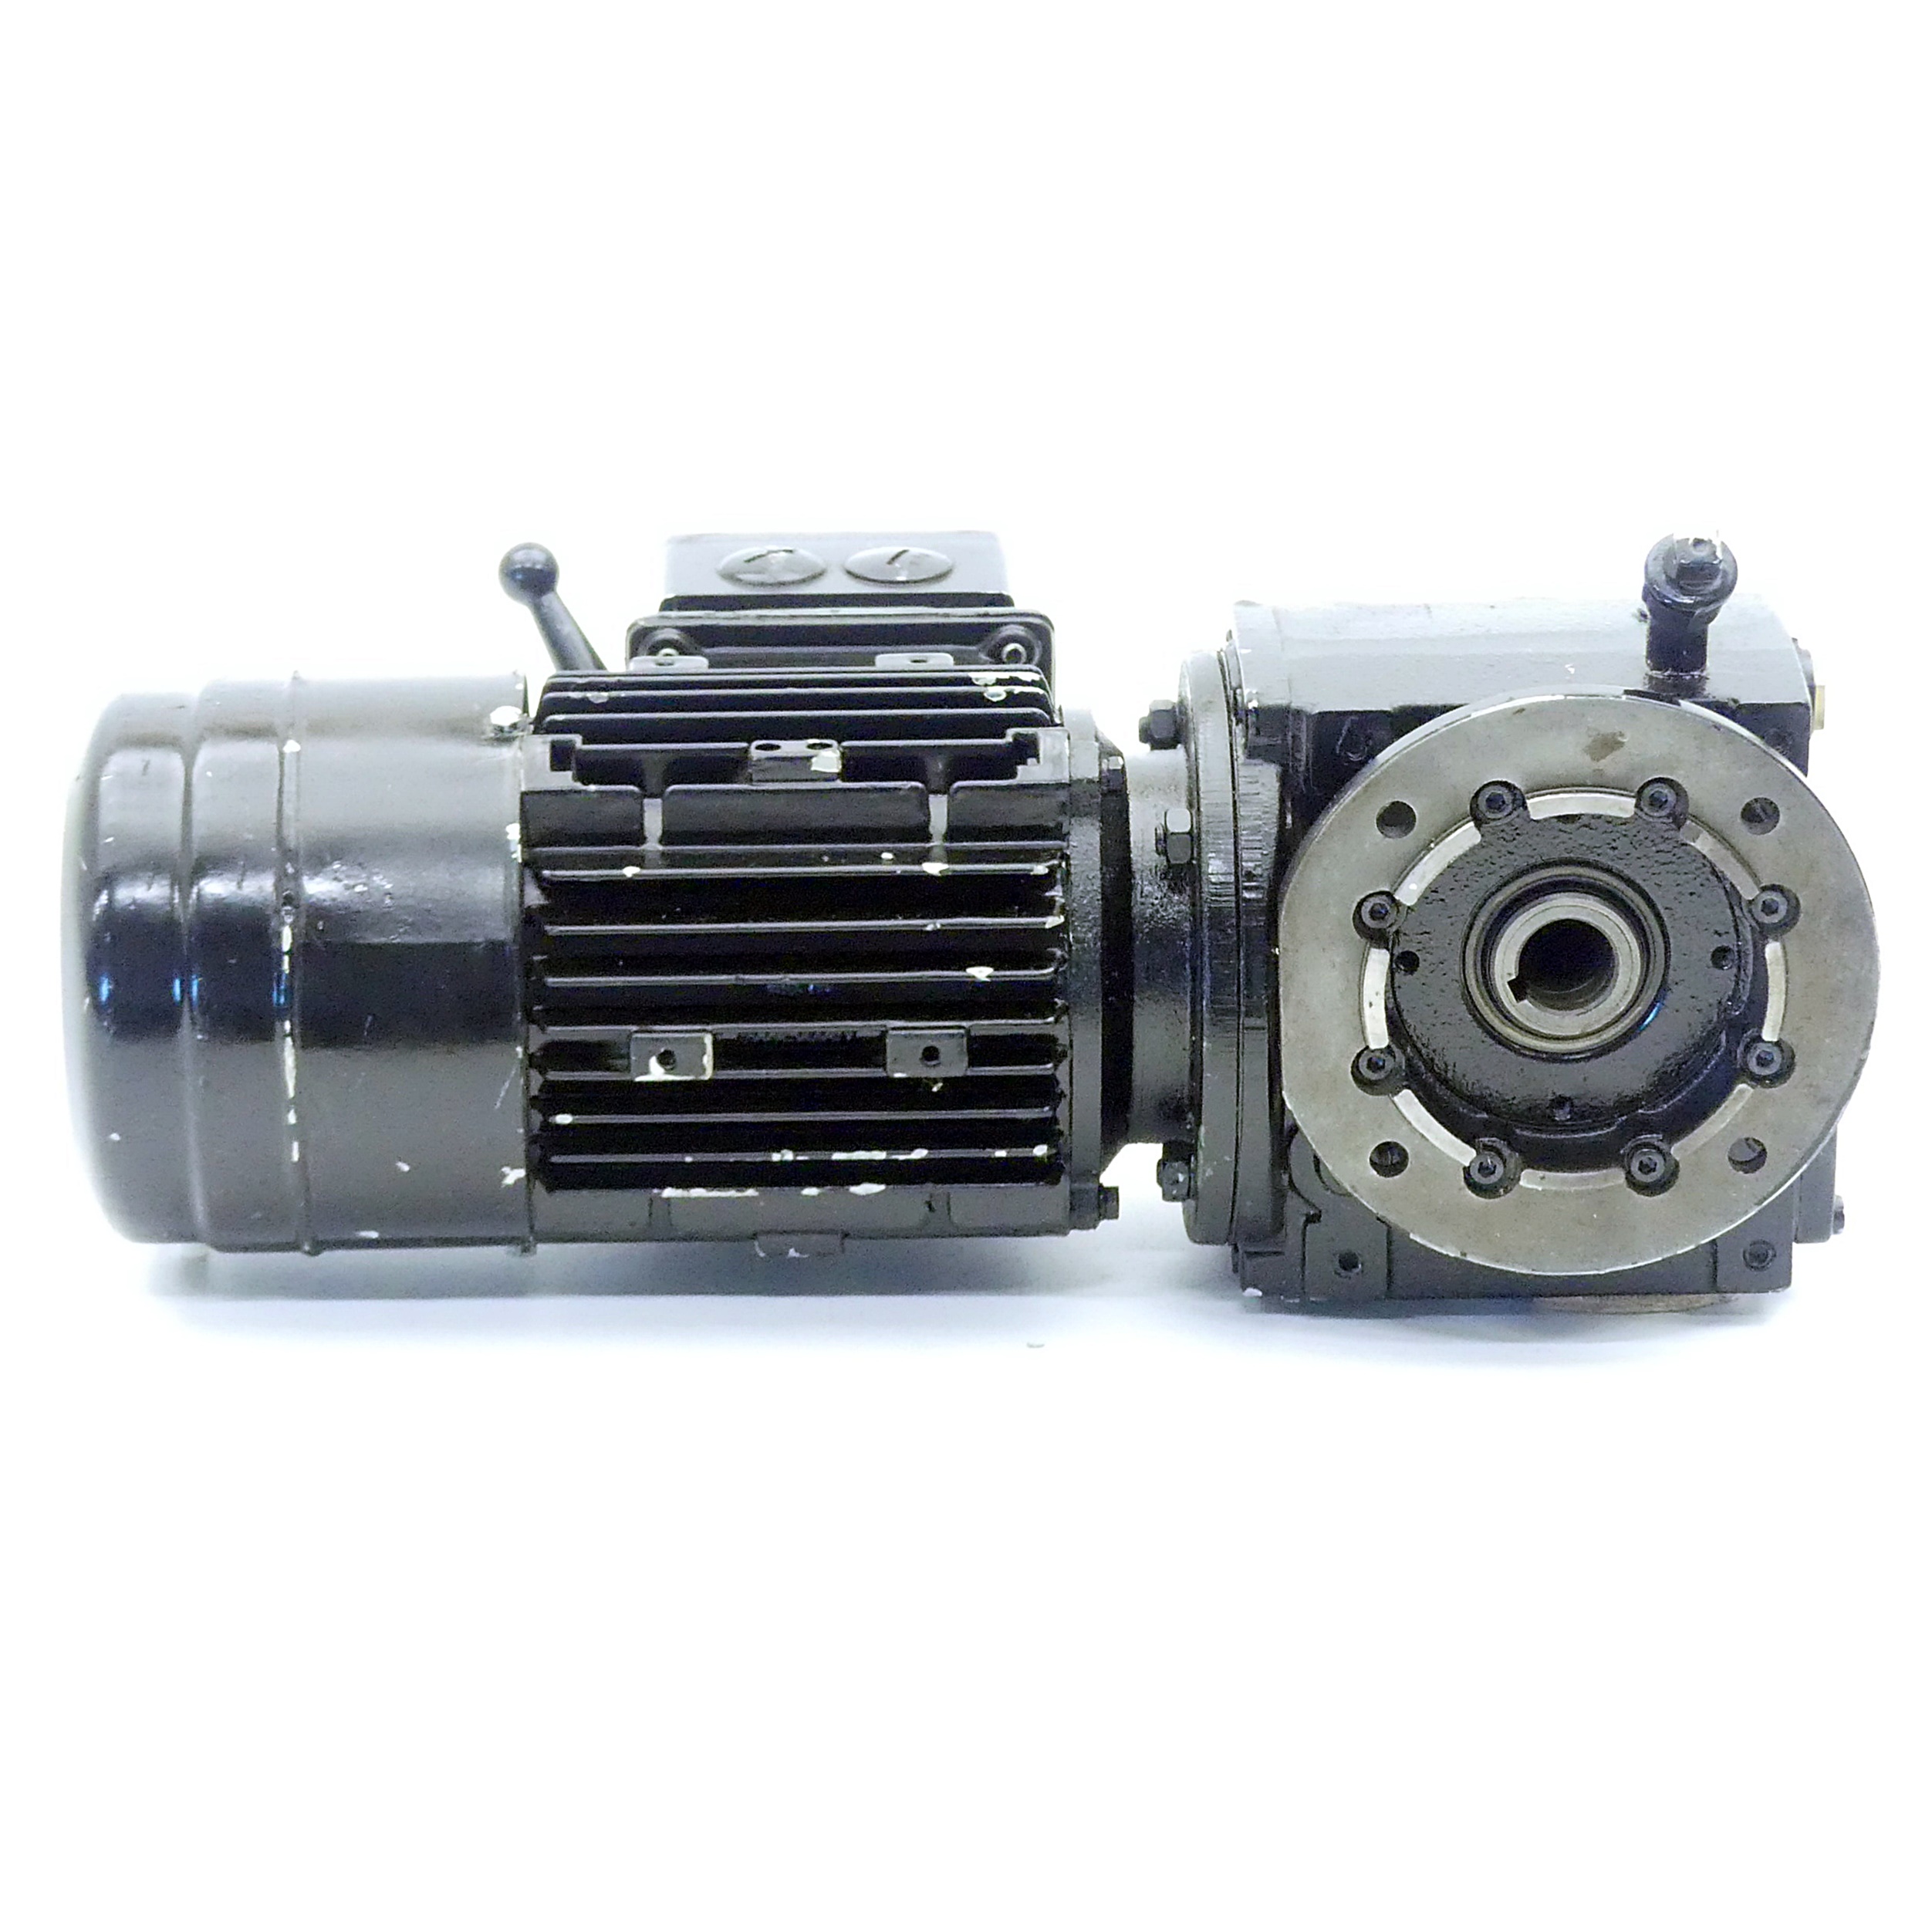 gear motor ABCA-01BG-426 + DVW1-1451-022/033 